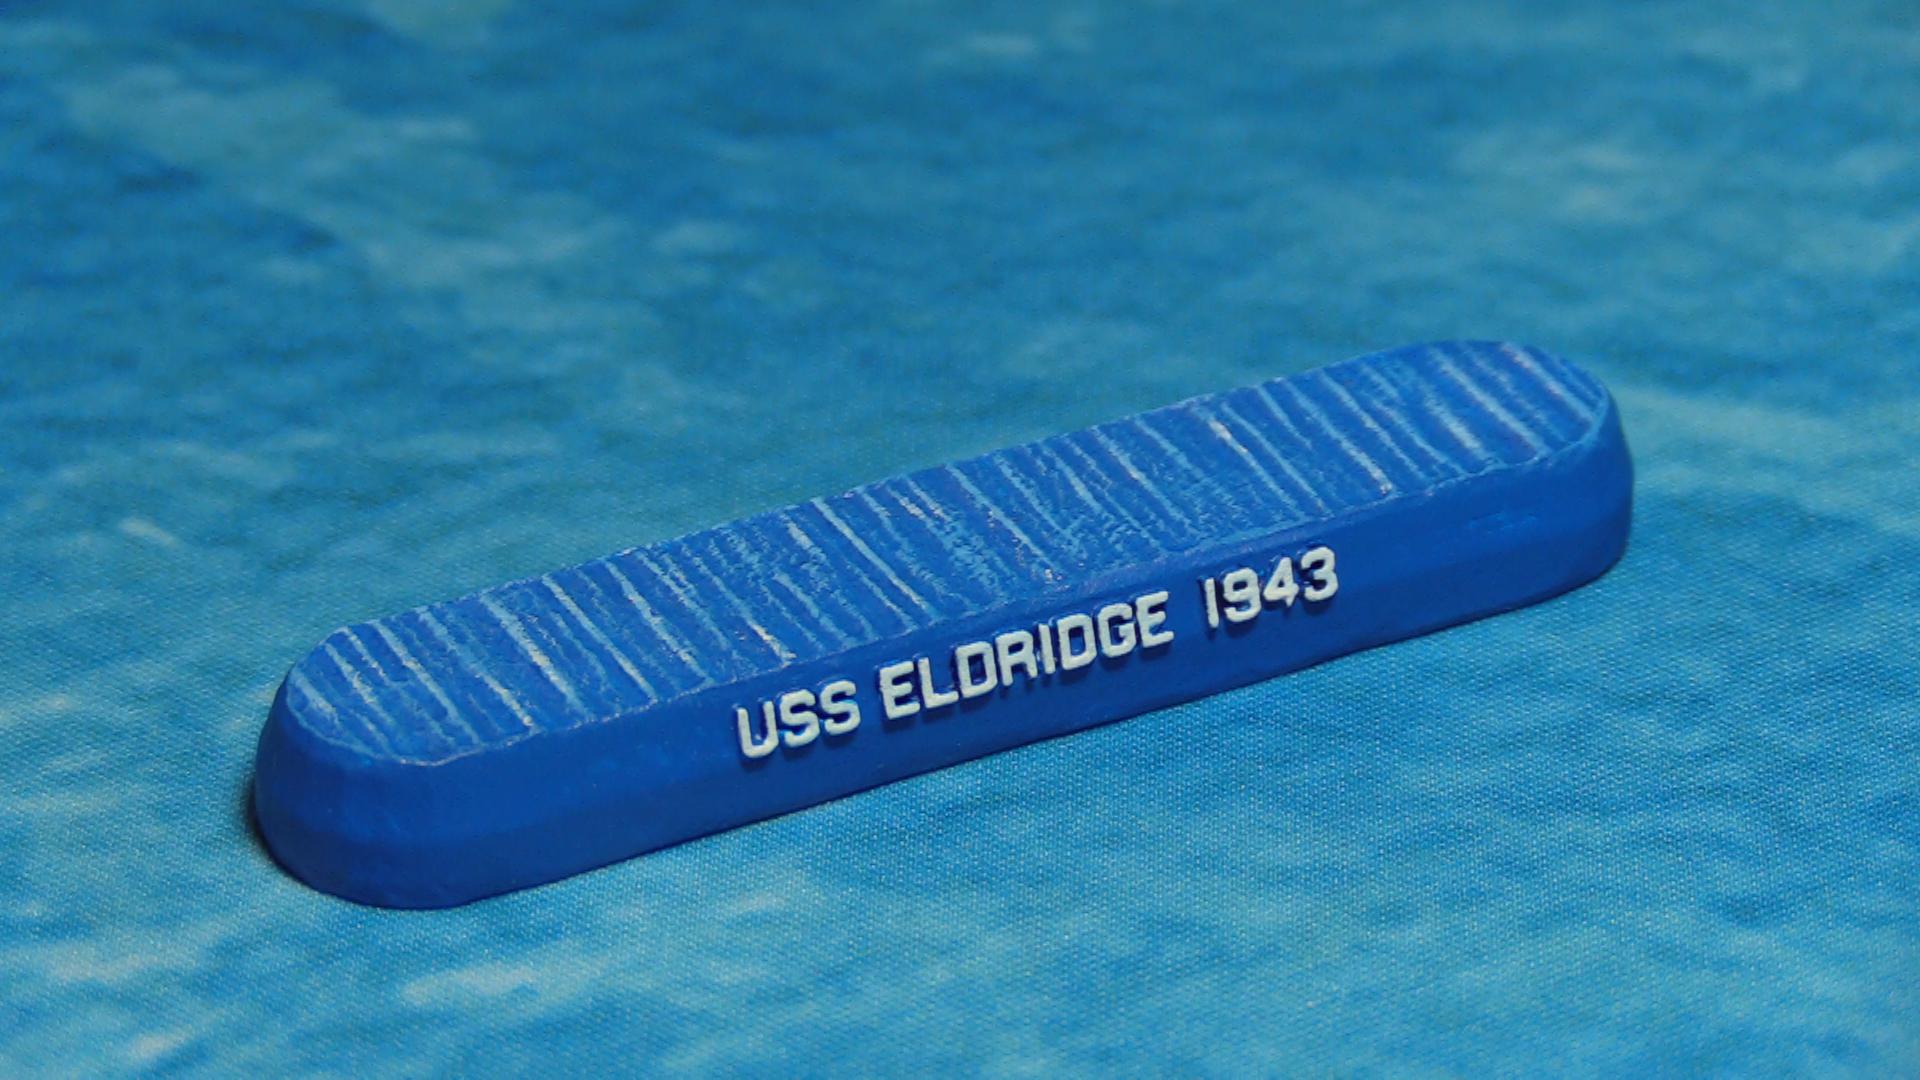 Uss Eldridge, USS Eldridge